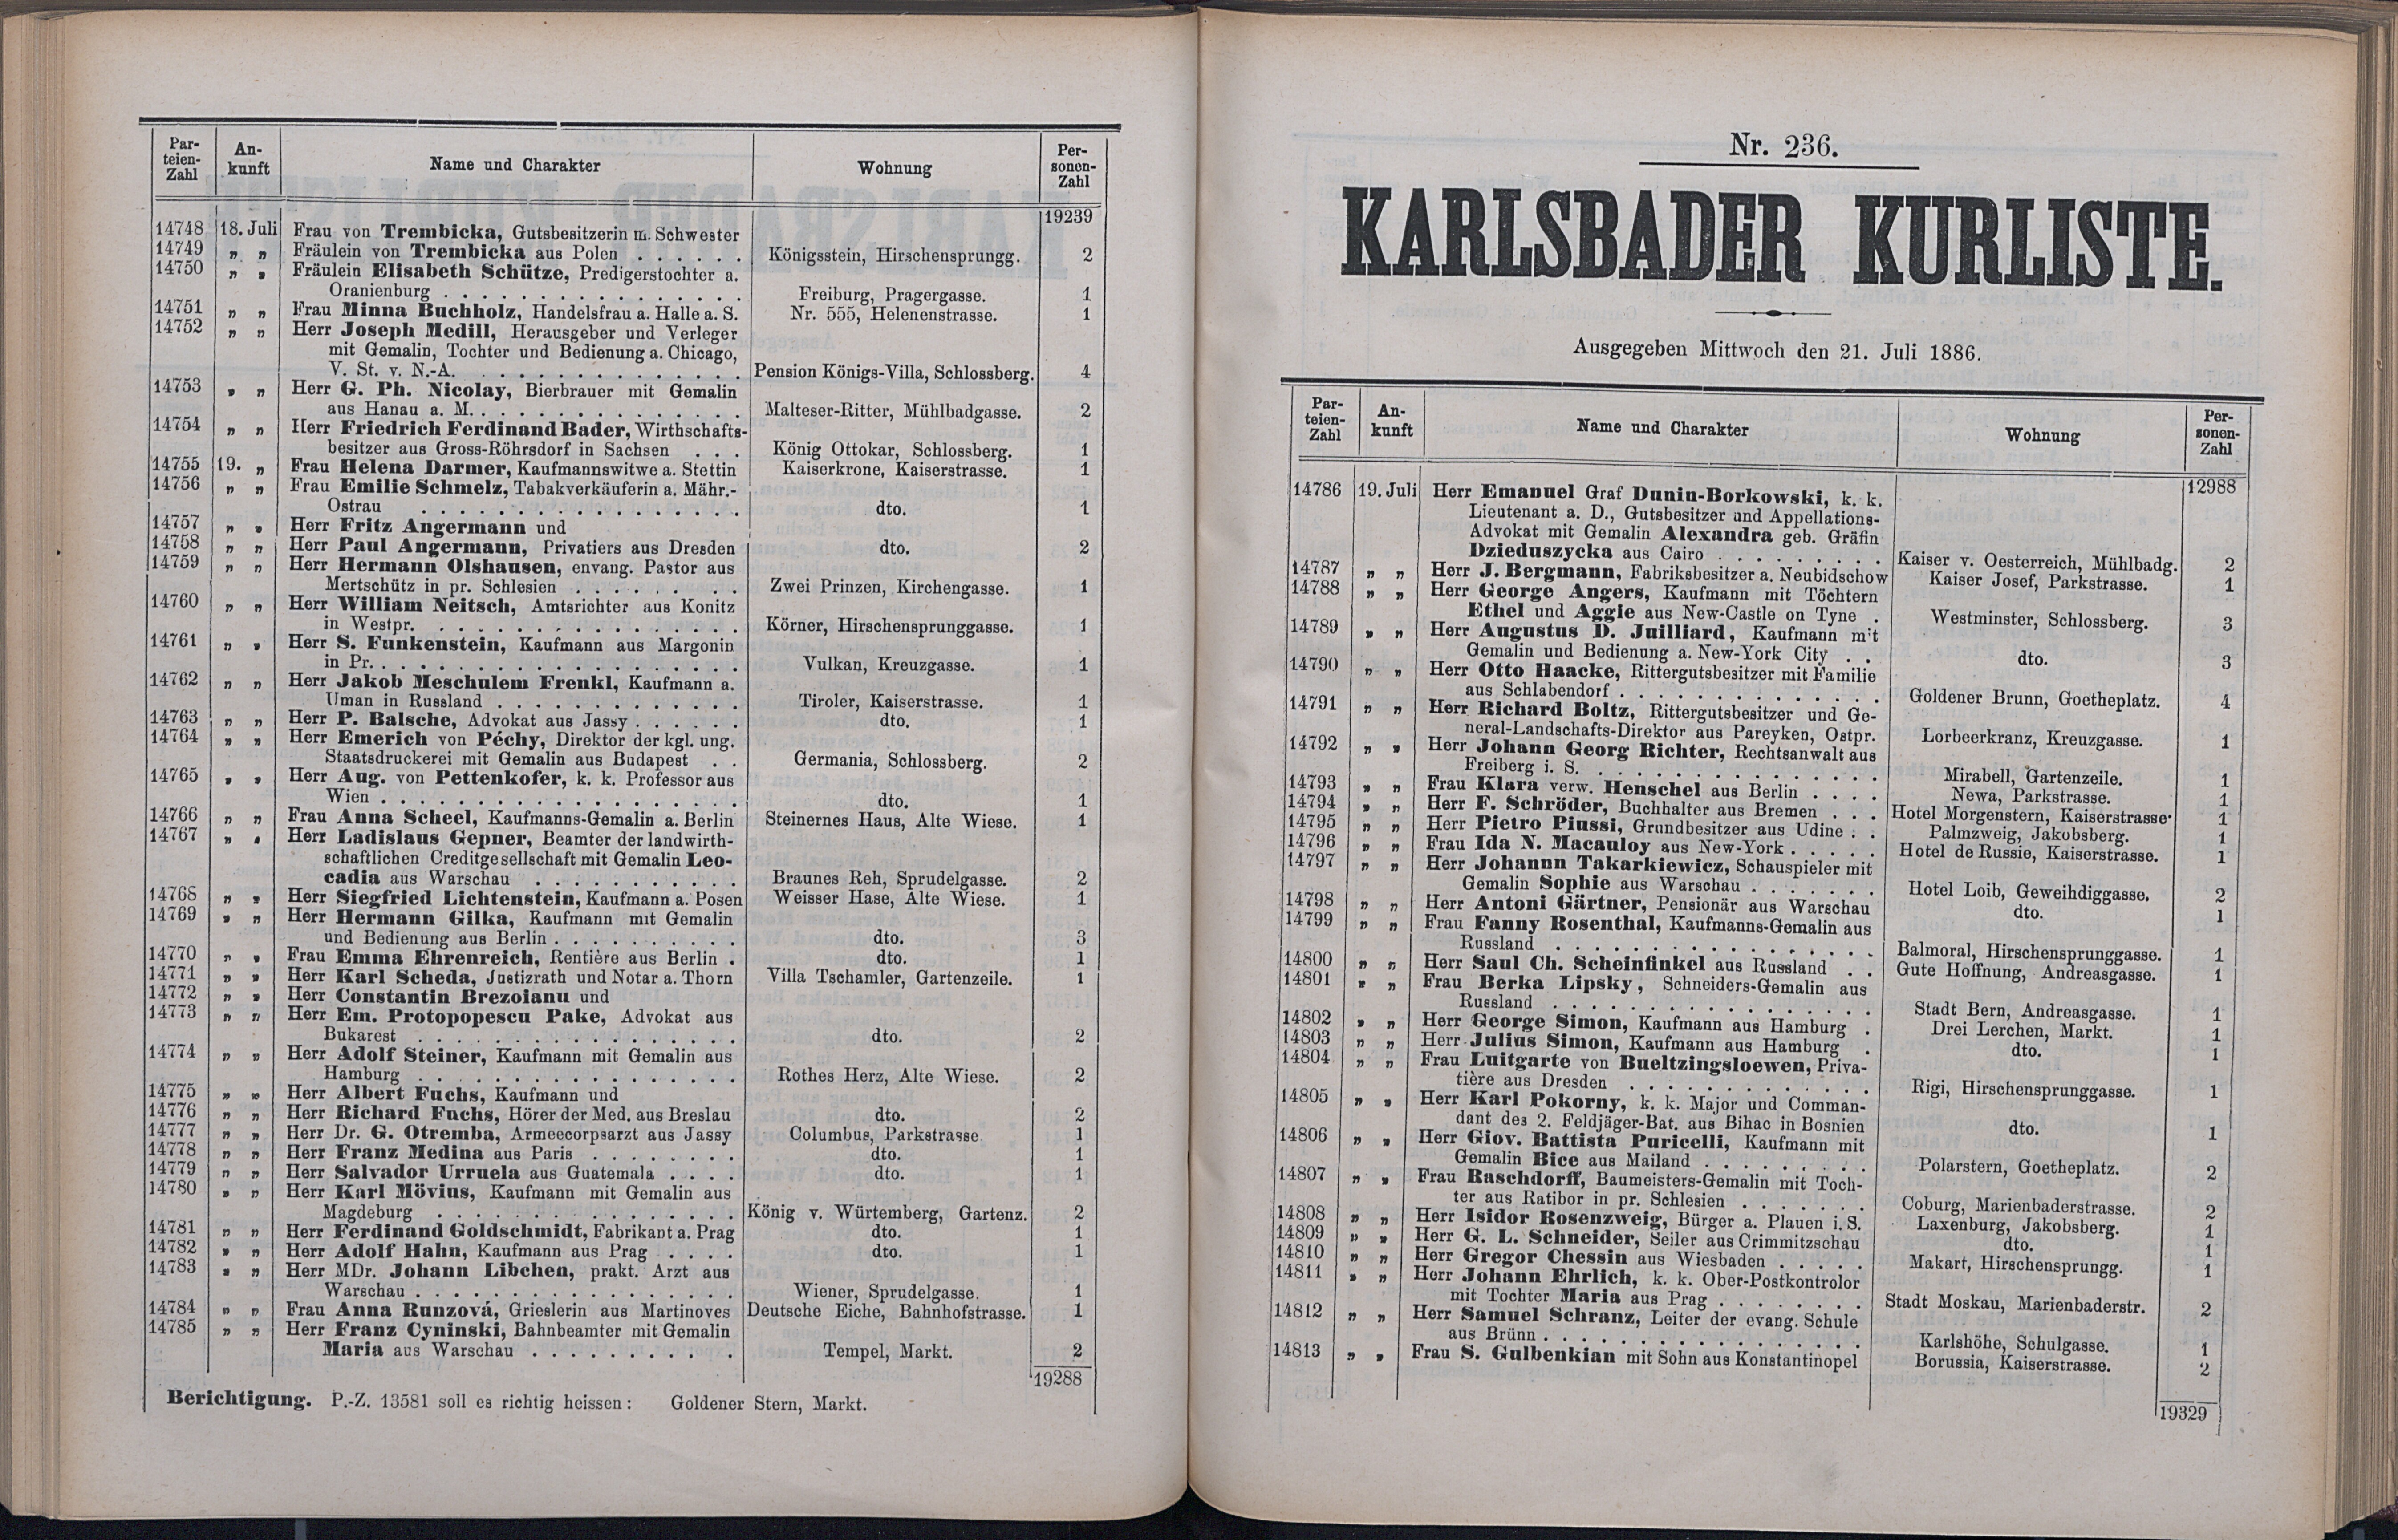 290. soap-kv_knihovna_karlsbader-kurliste-1886_2910